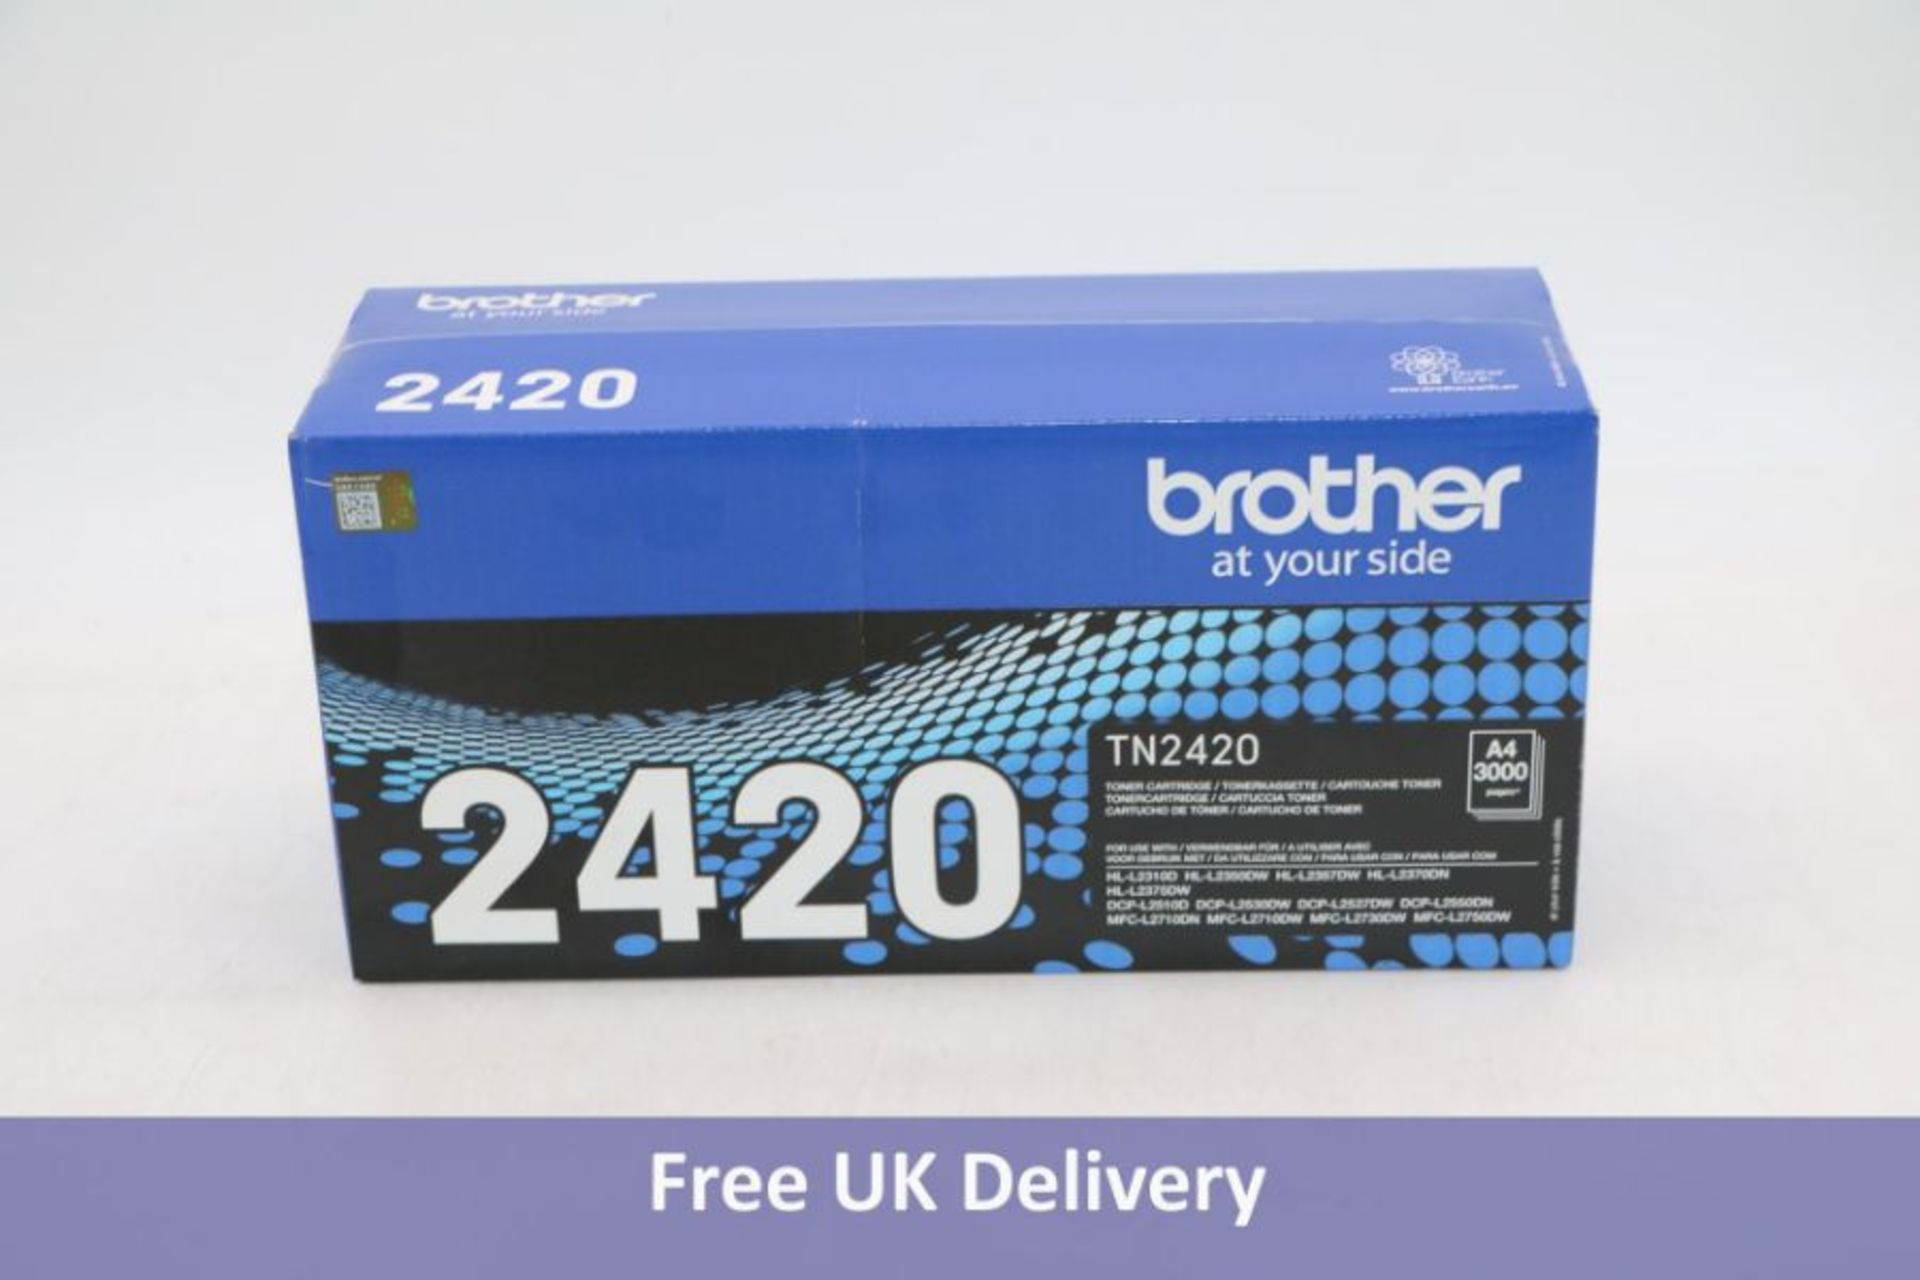 Brother TN-2420 Toner Cartridge, Black